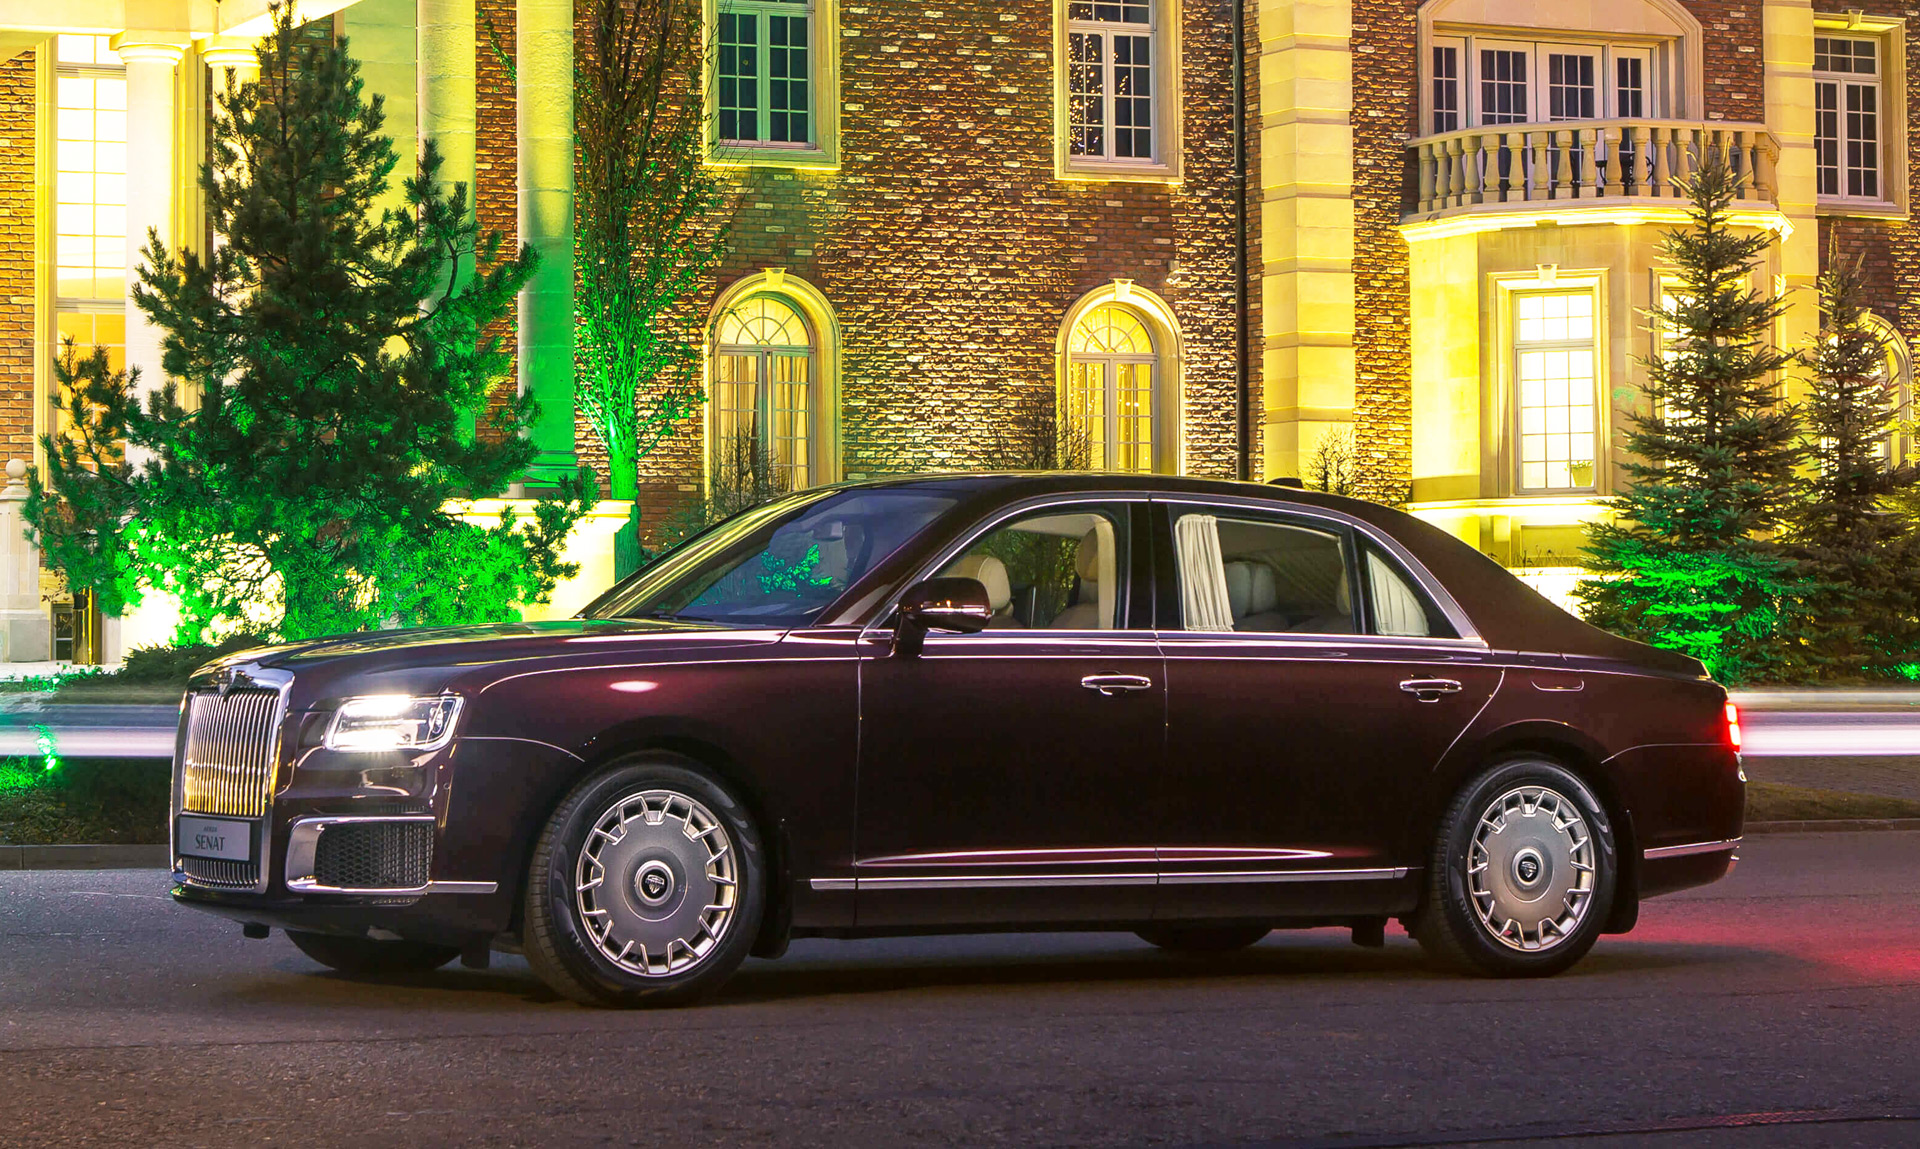 The Aurus Senat, aka Putin's limo, priced at $274,000